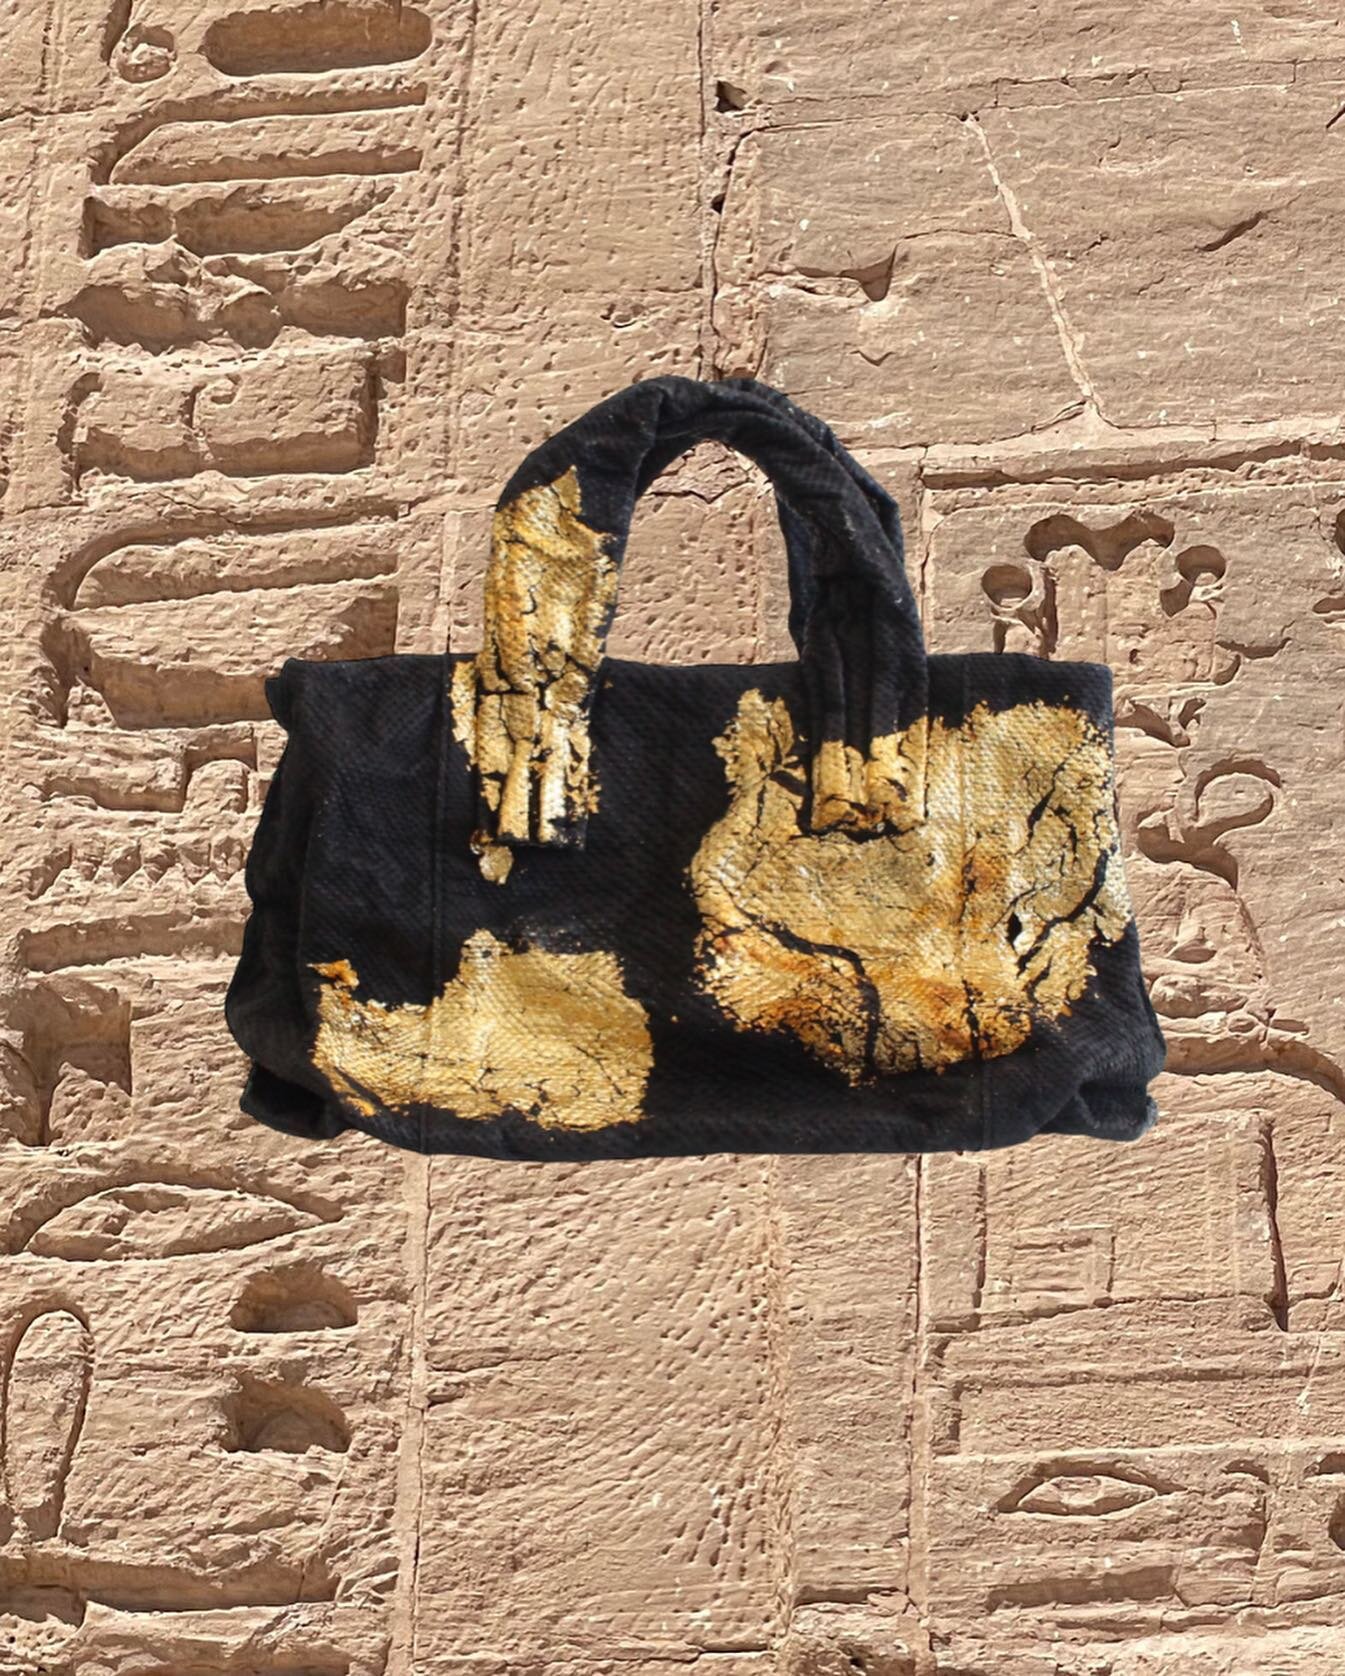 Nei desideri di Ramset III  c&rsquo;&egrave; la bag Simona Tagliaferri. 

Karung e oro 24 Kt. 

#simonatagliaferri #bag #karung #gold #gold24kt #egypt #escape #dream #lucury #lucuryitems #anima #leather #handcrafted #madeinitaly #oneofakind